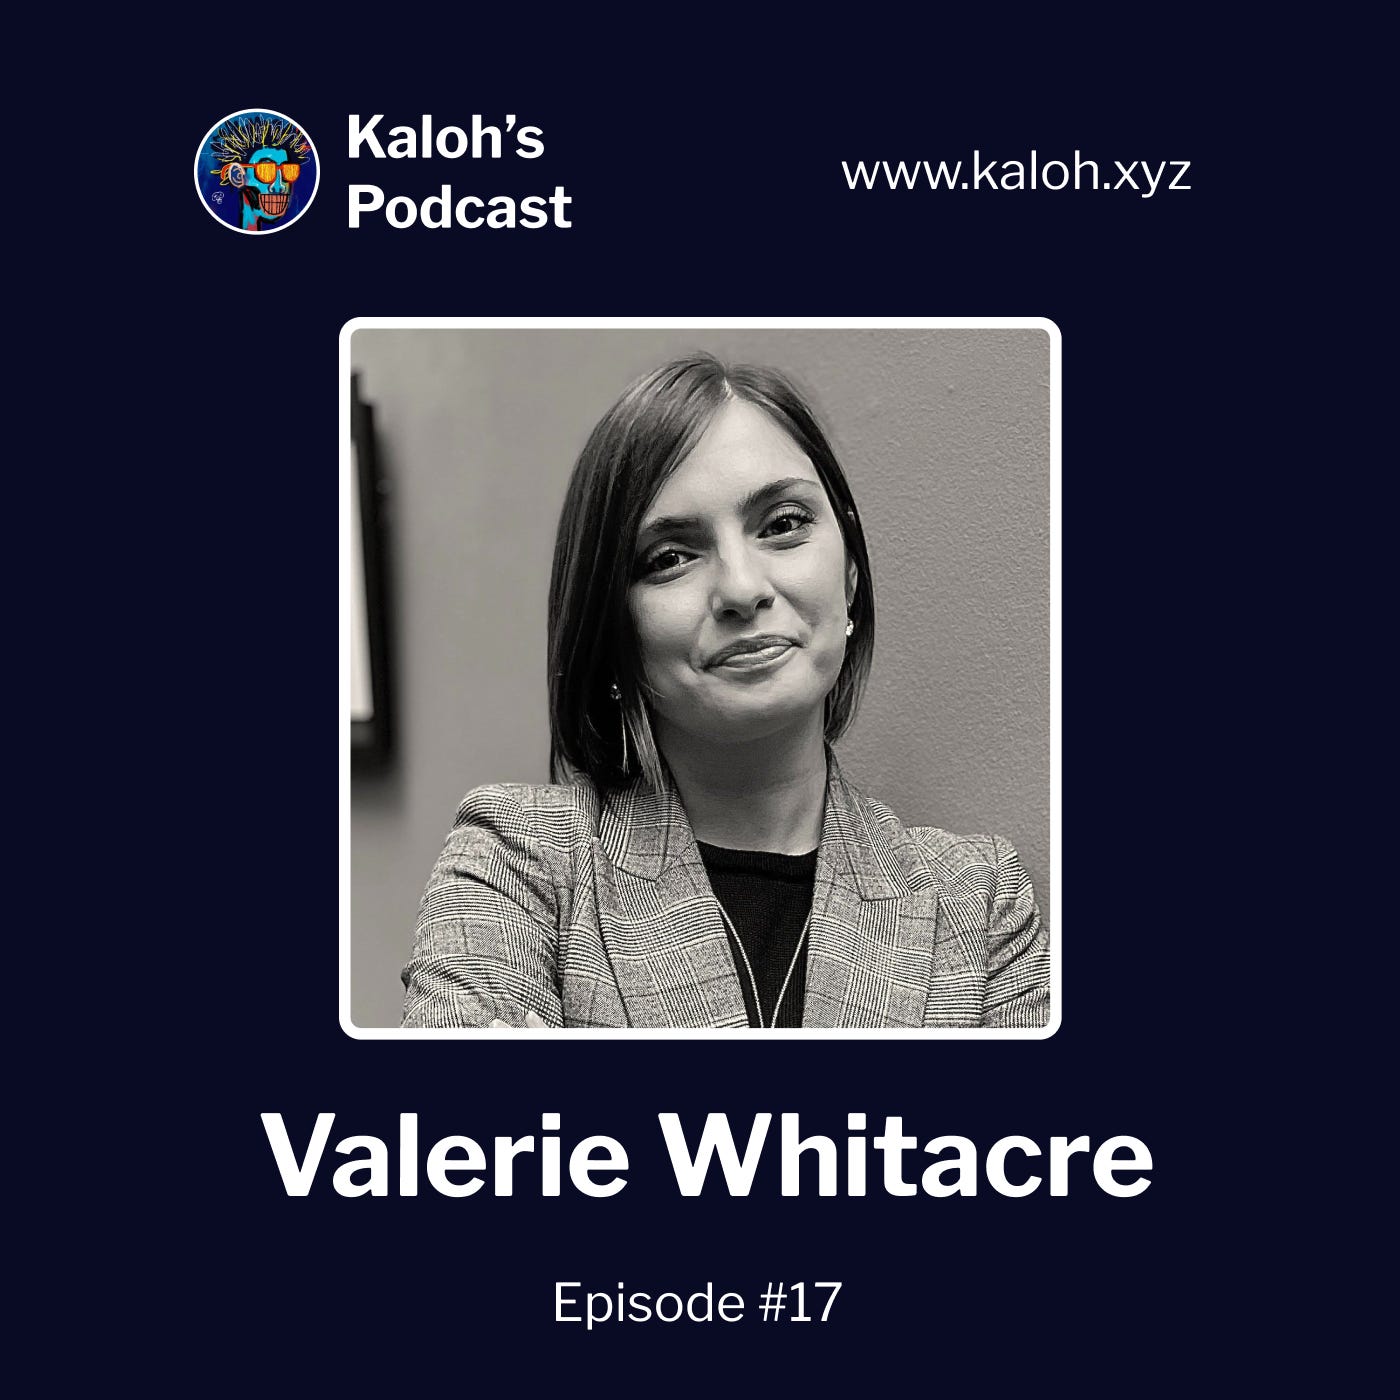 Kaloh's Podcast Episode 17: Valerie Whitacre